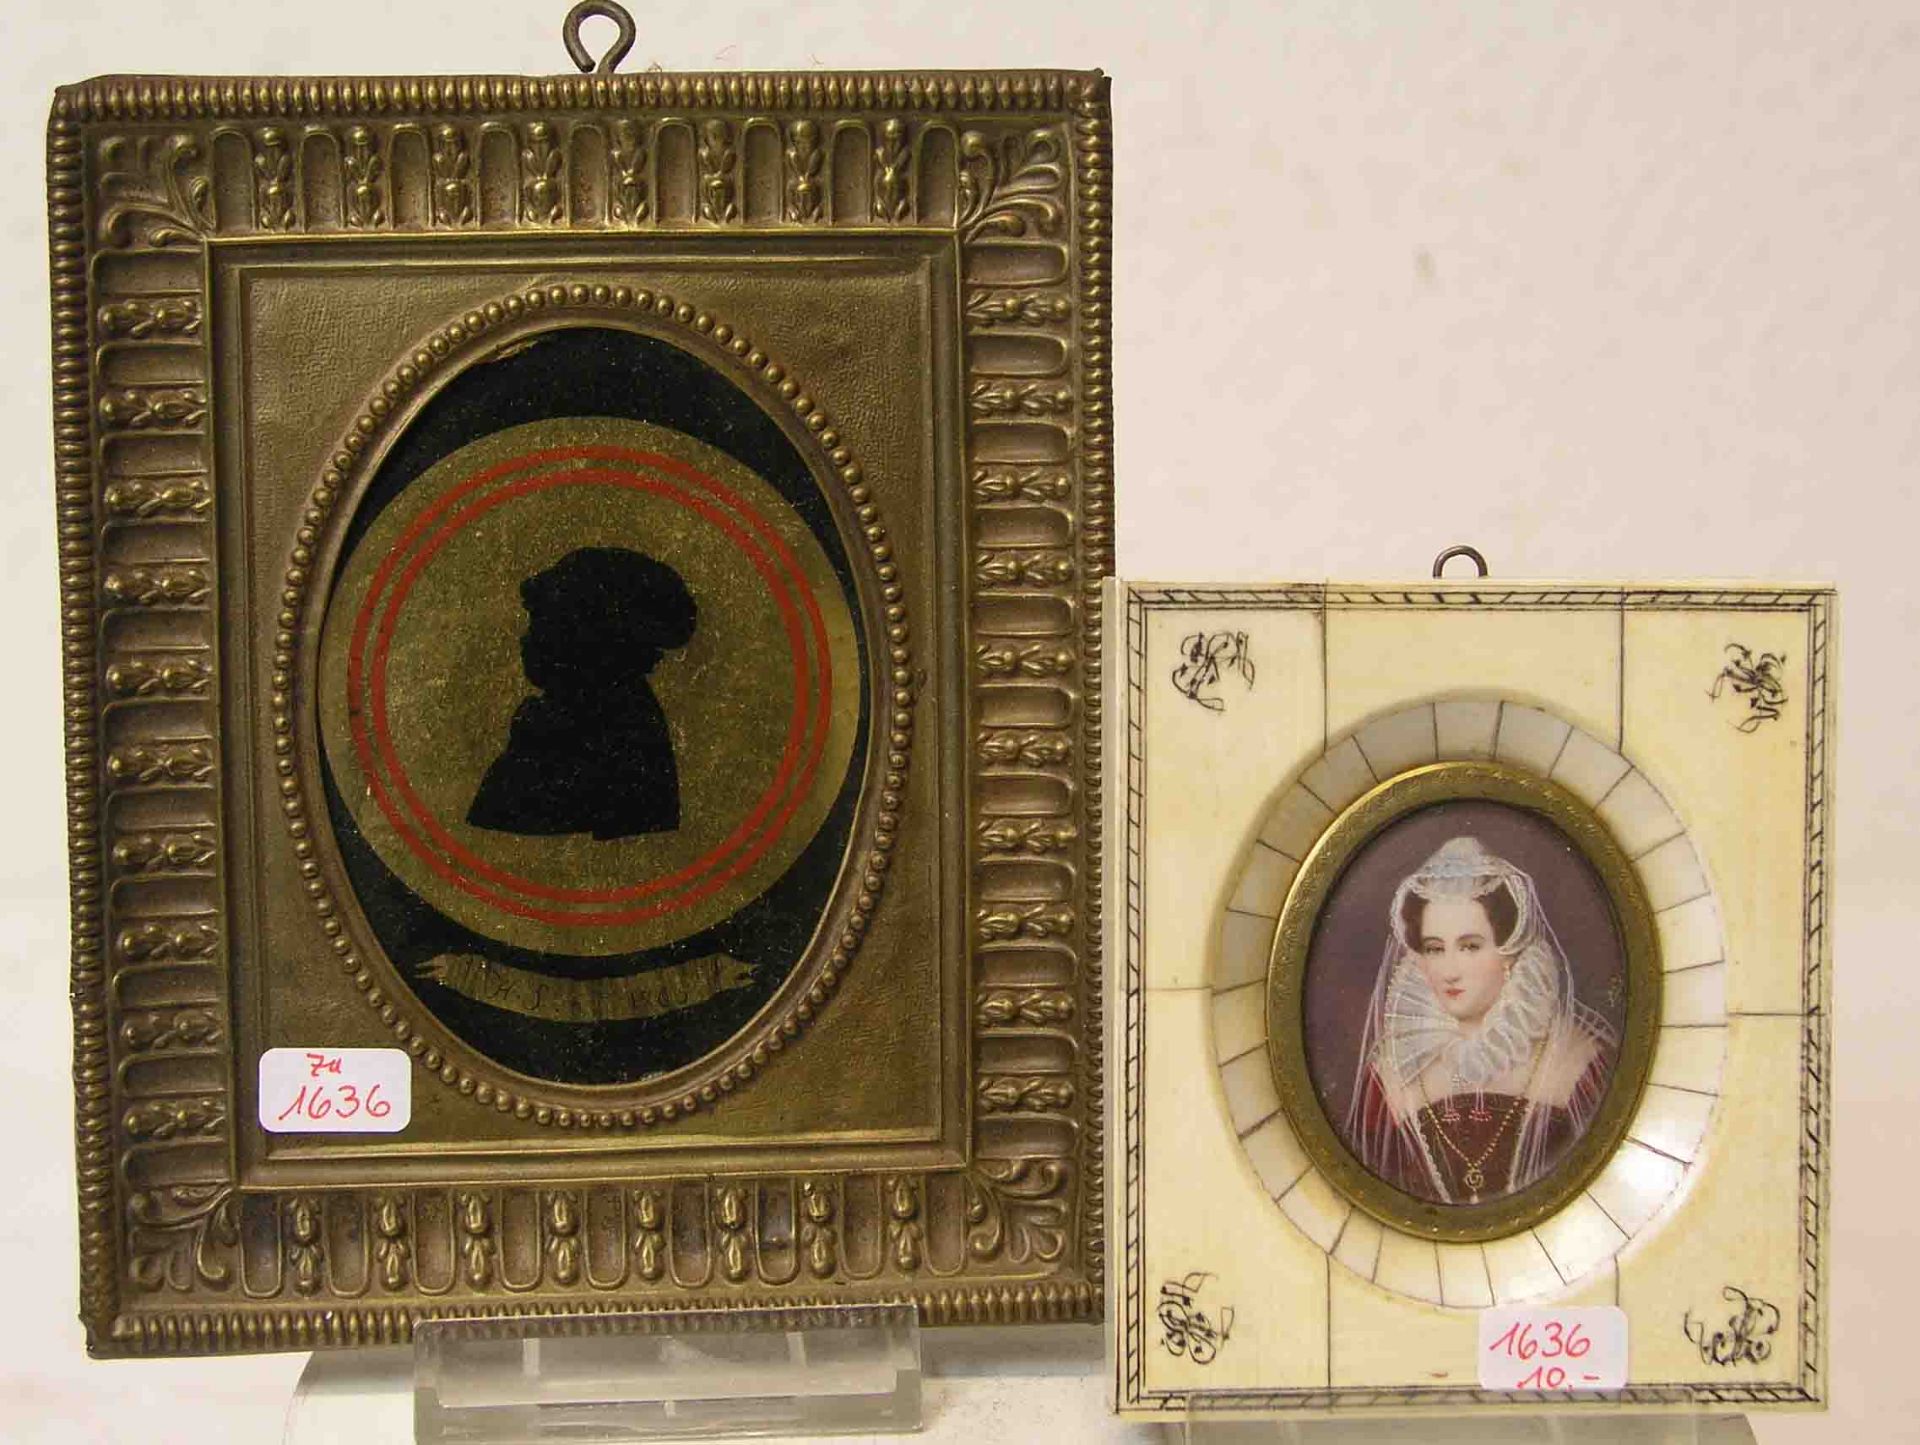 Zwei Miniaturen. Dabei: "Frauenportrait". Öl/Elfenbein, ovaler Bildausschnitt, Gesamtmaße:9,5 x 8,